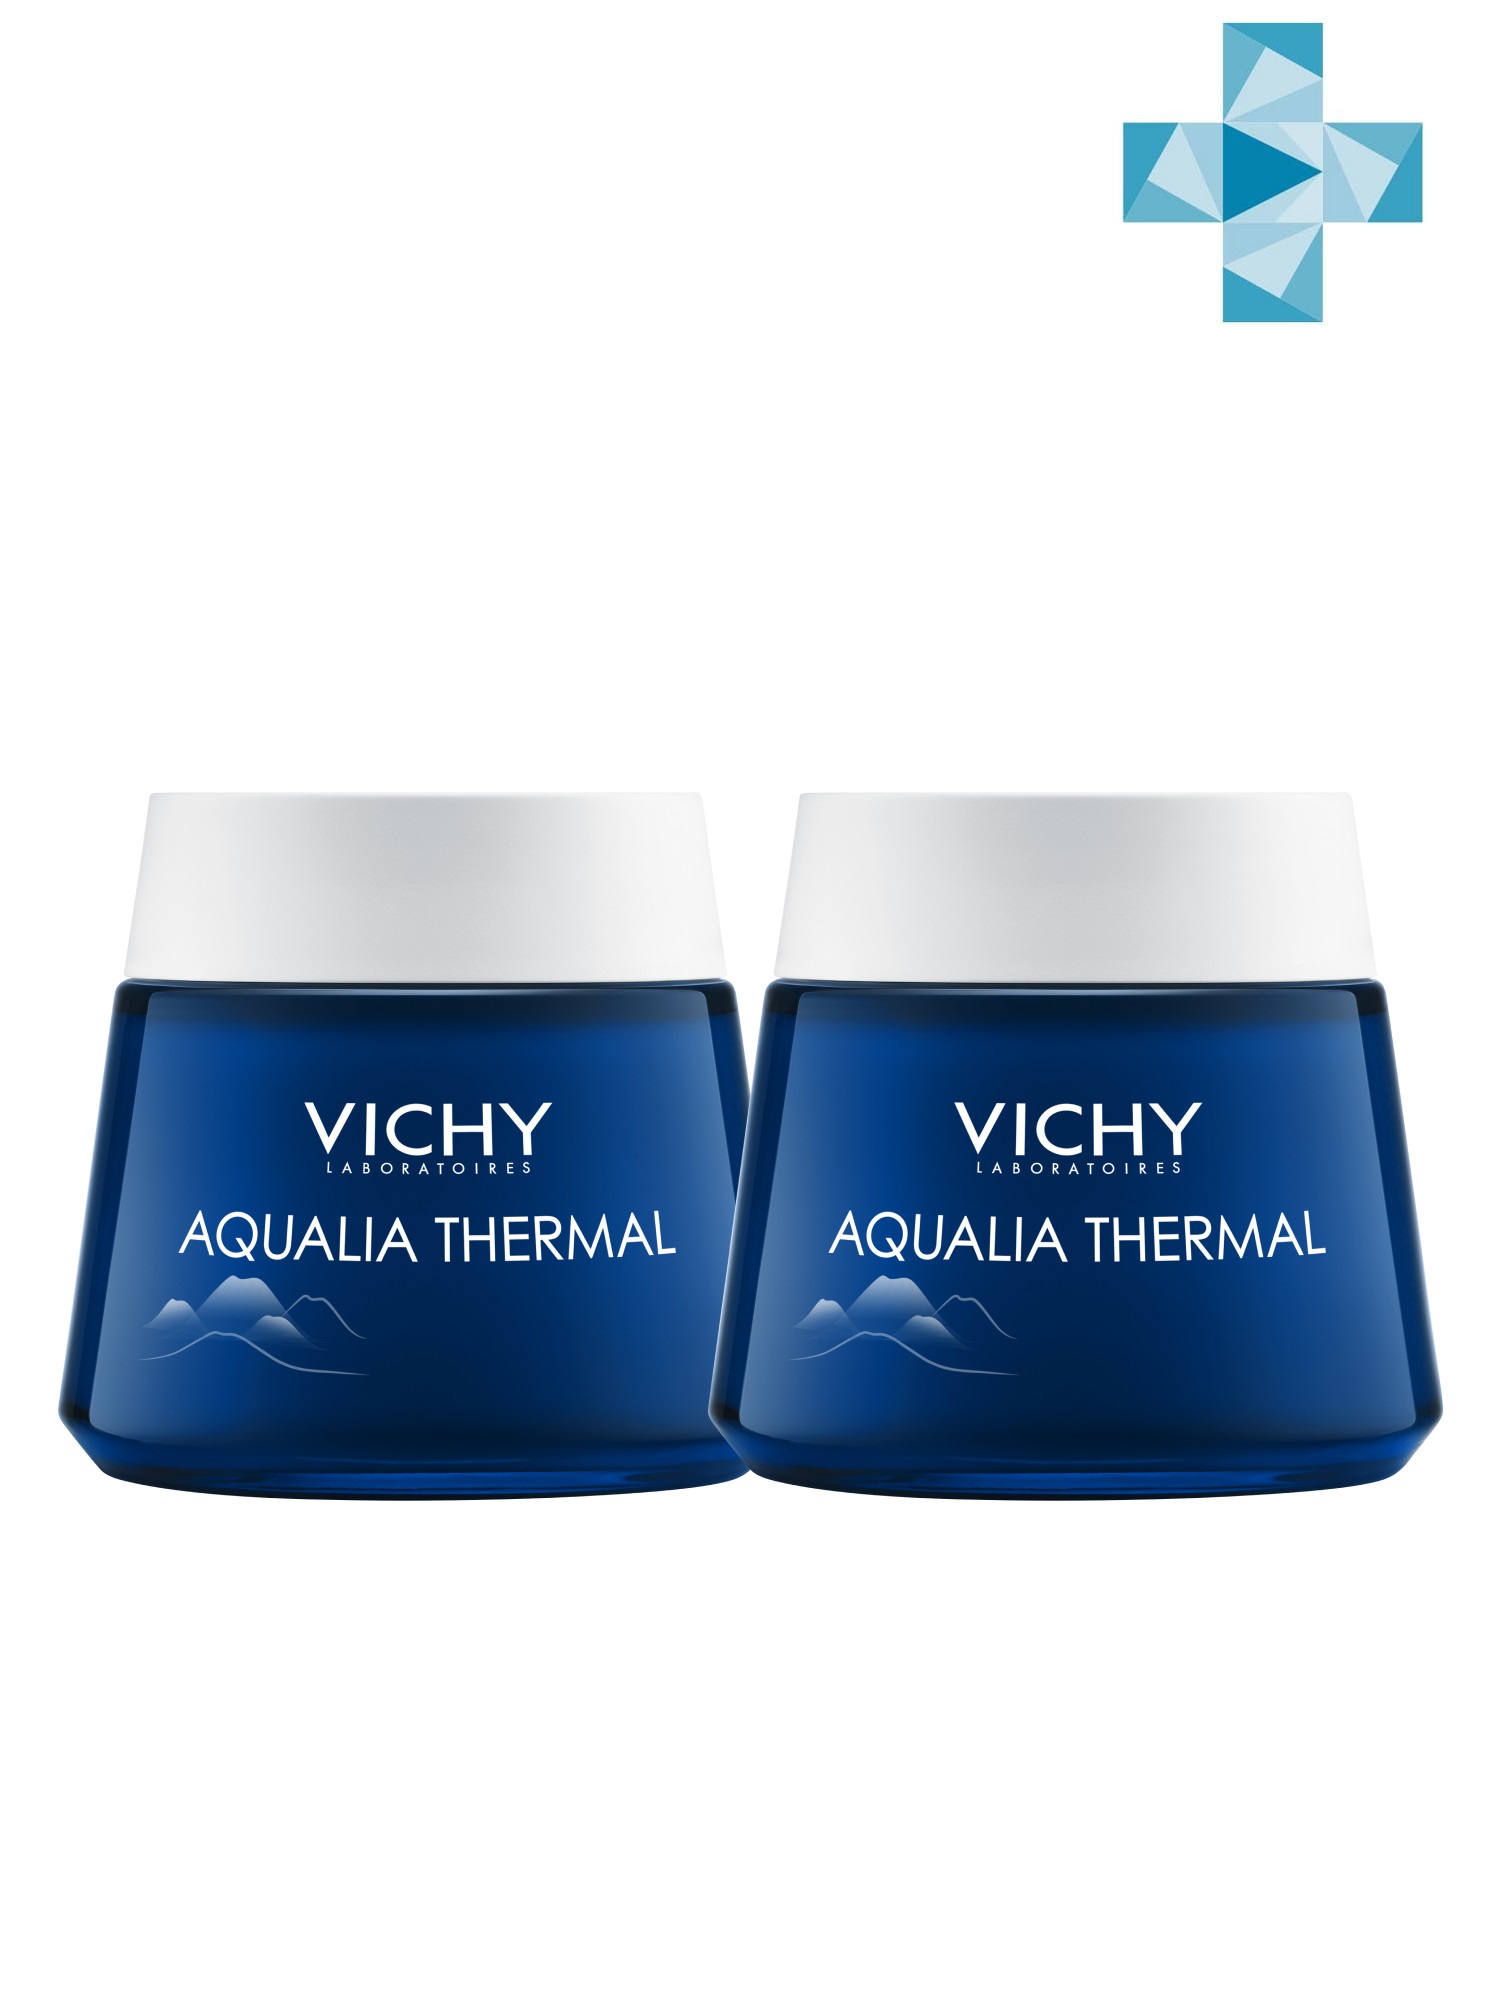 Vichy Комплект Аквалия Термаль Ночной Спа-ритуал крем-гель, 2 шт. по 75 мл (Vichy, Aqualia Thermal)